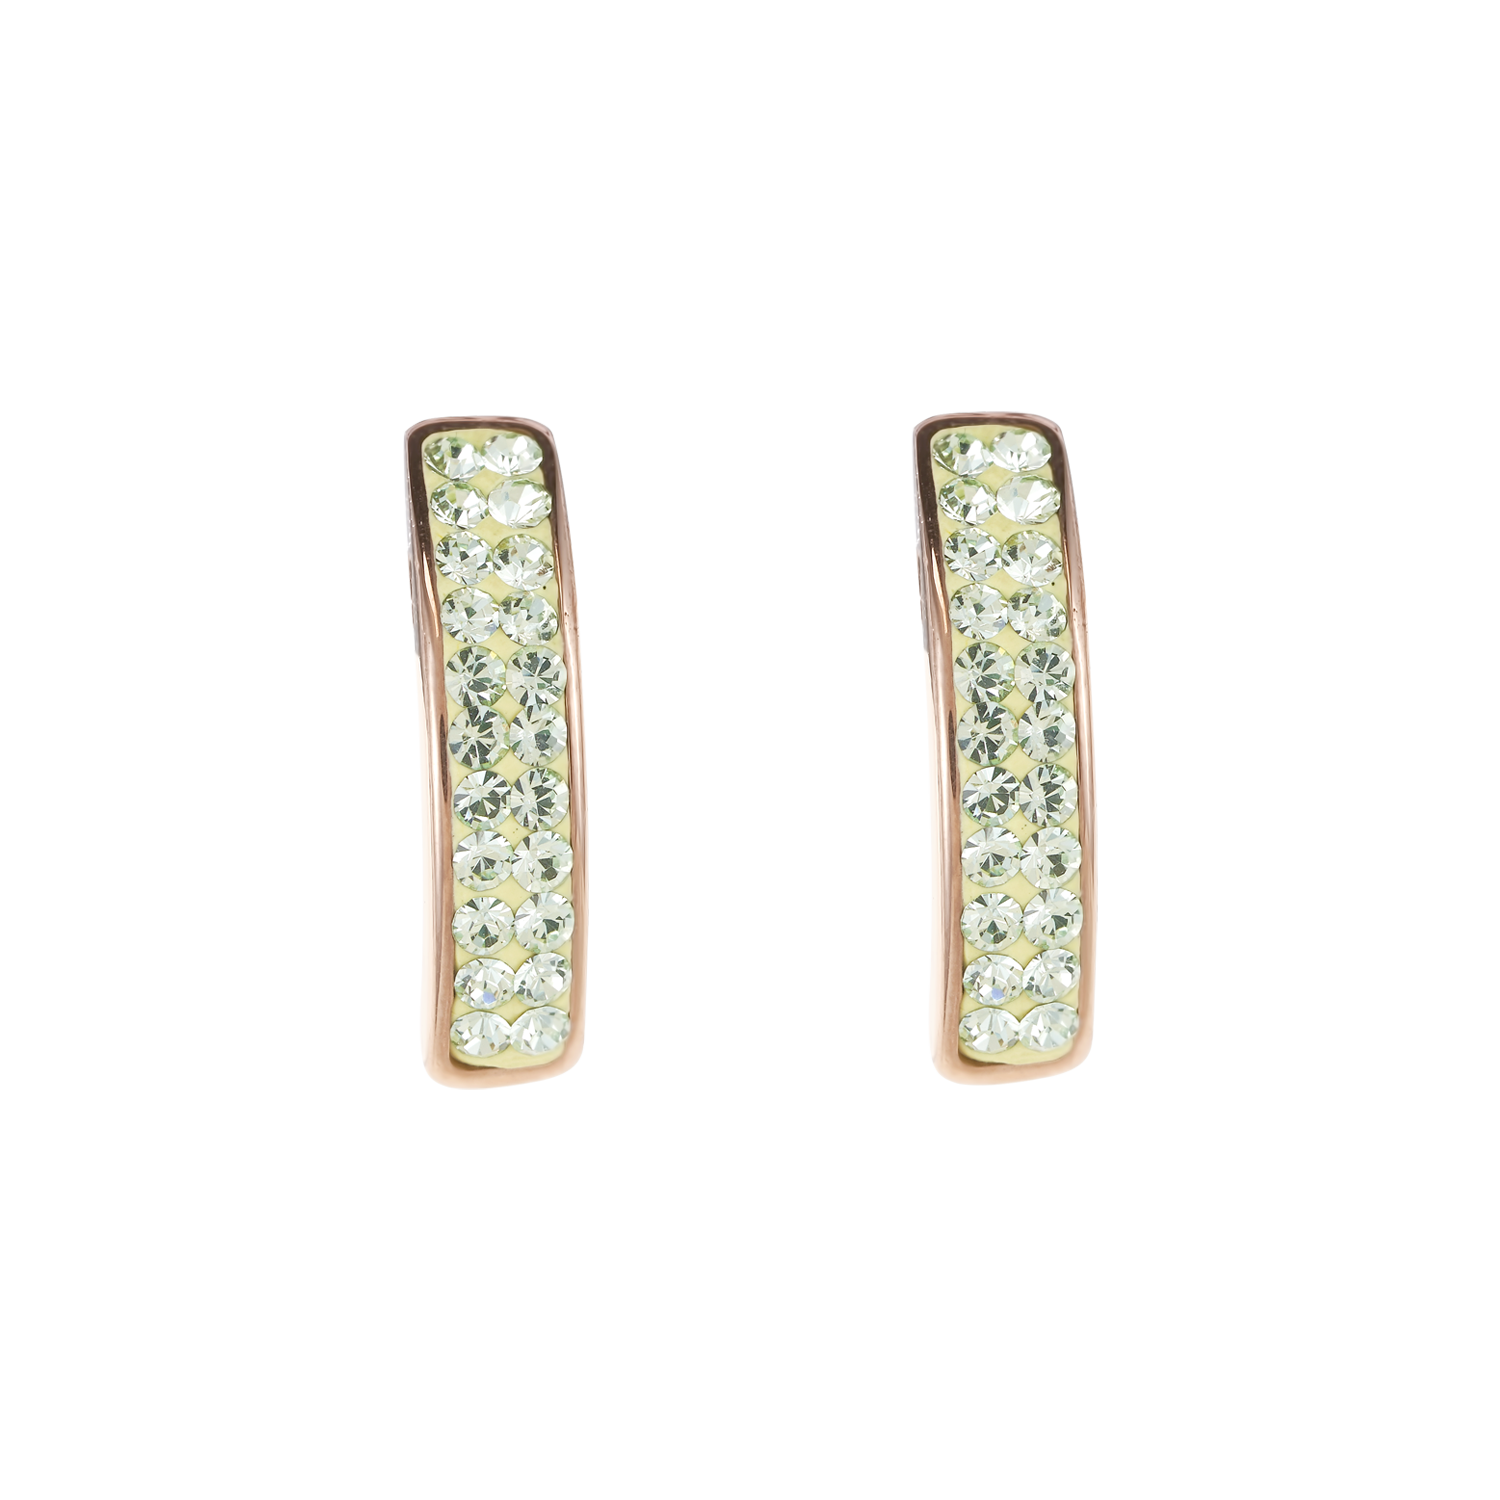 Earrings stainless steel rose gold & crystals pavé light green